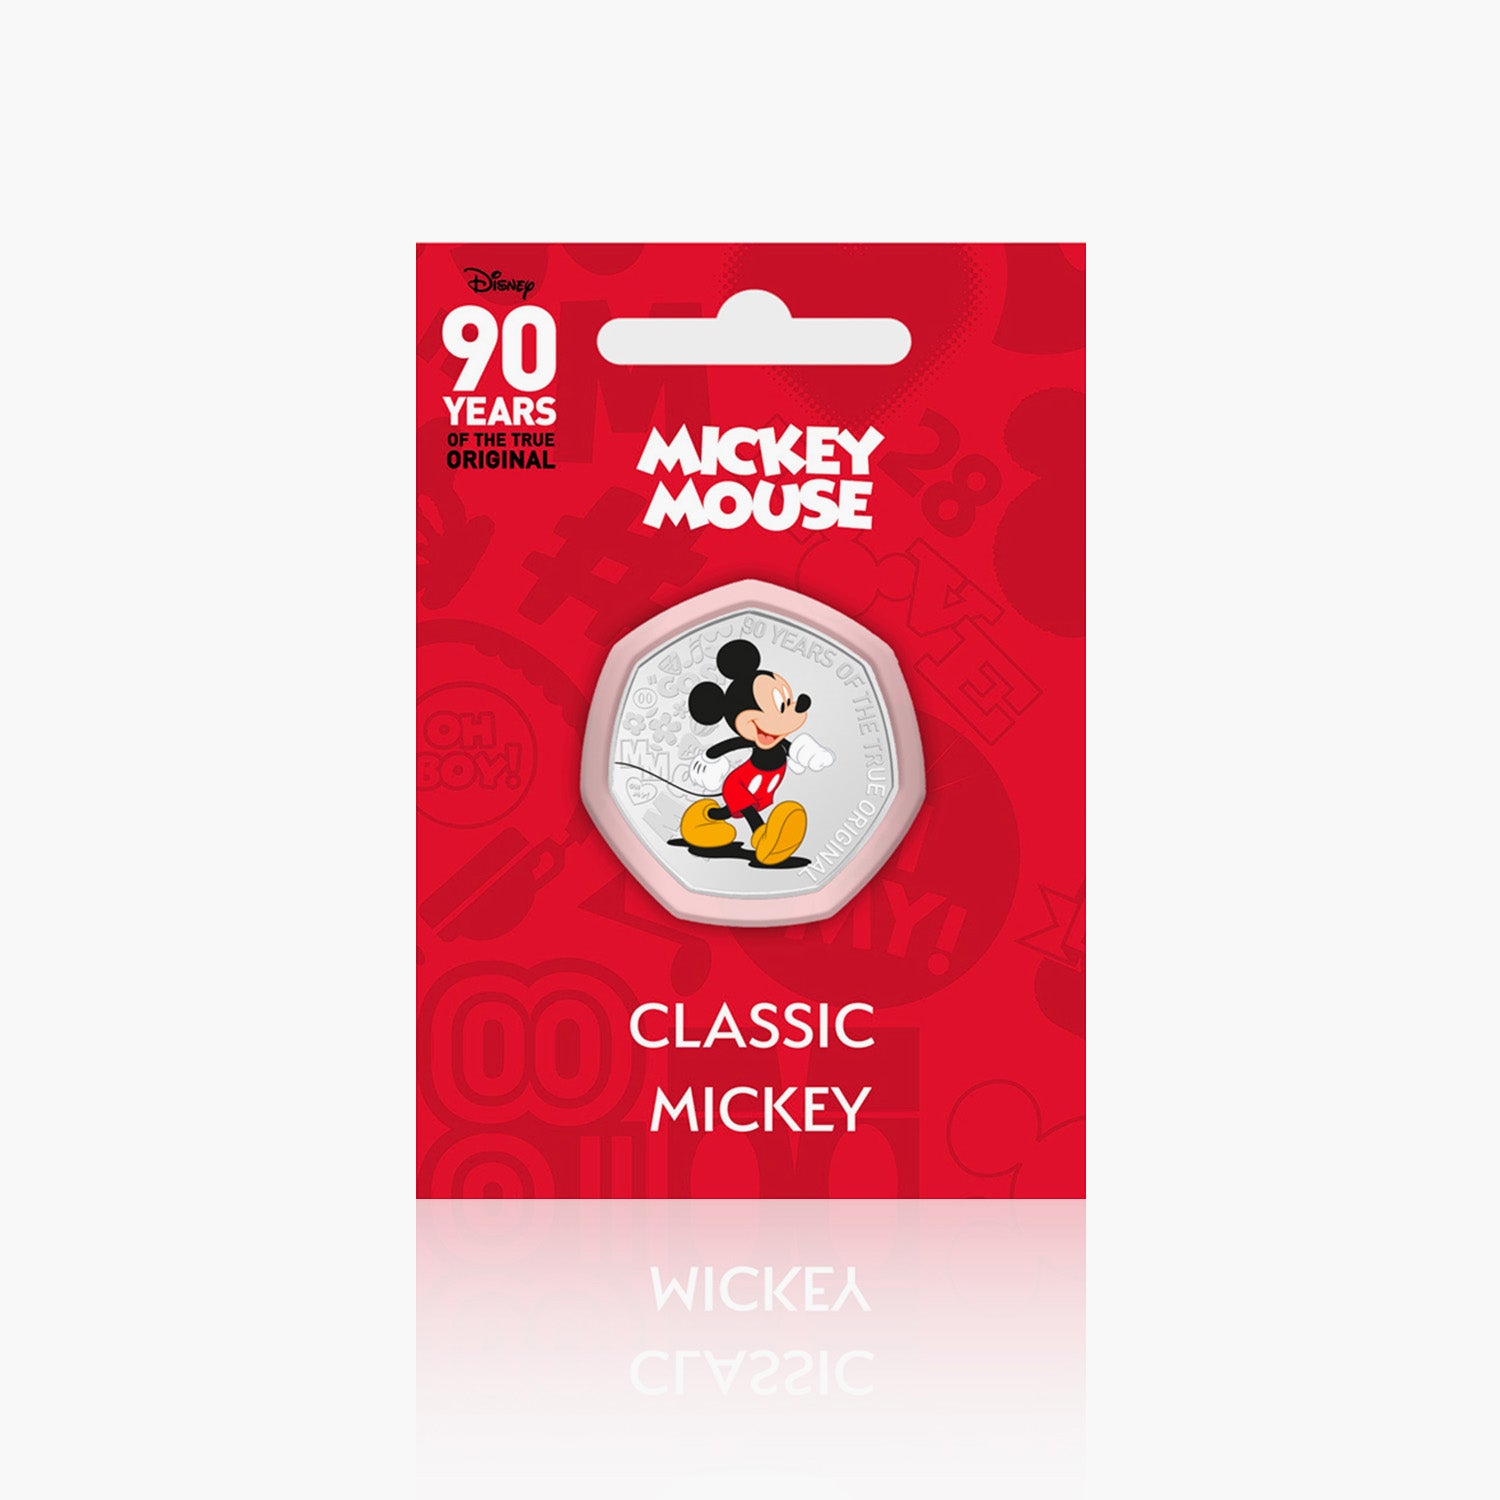 Classic Mickey Silver-Plated Commemorative